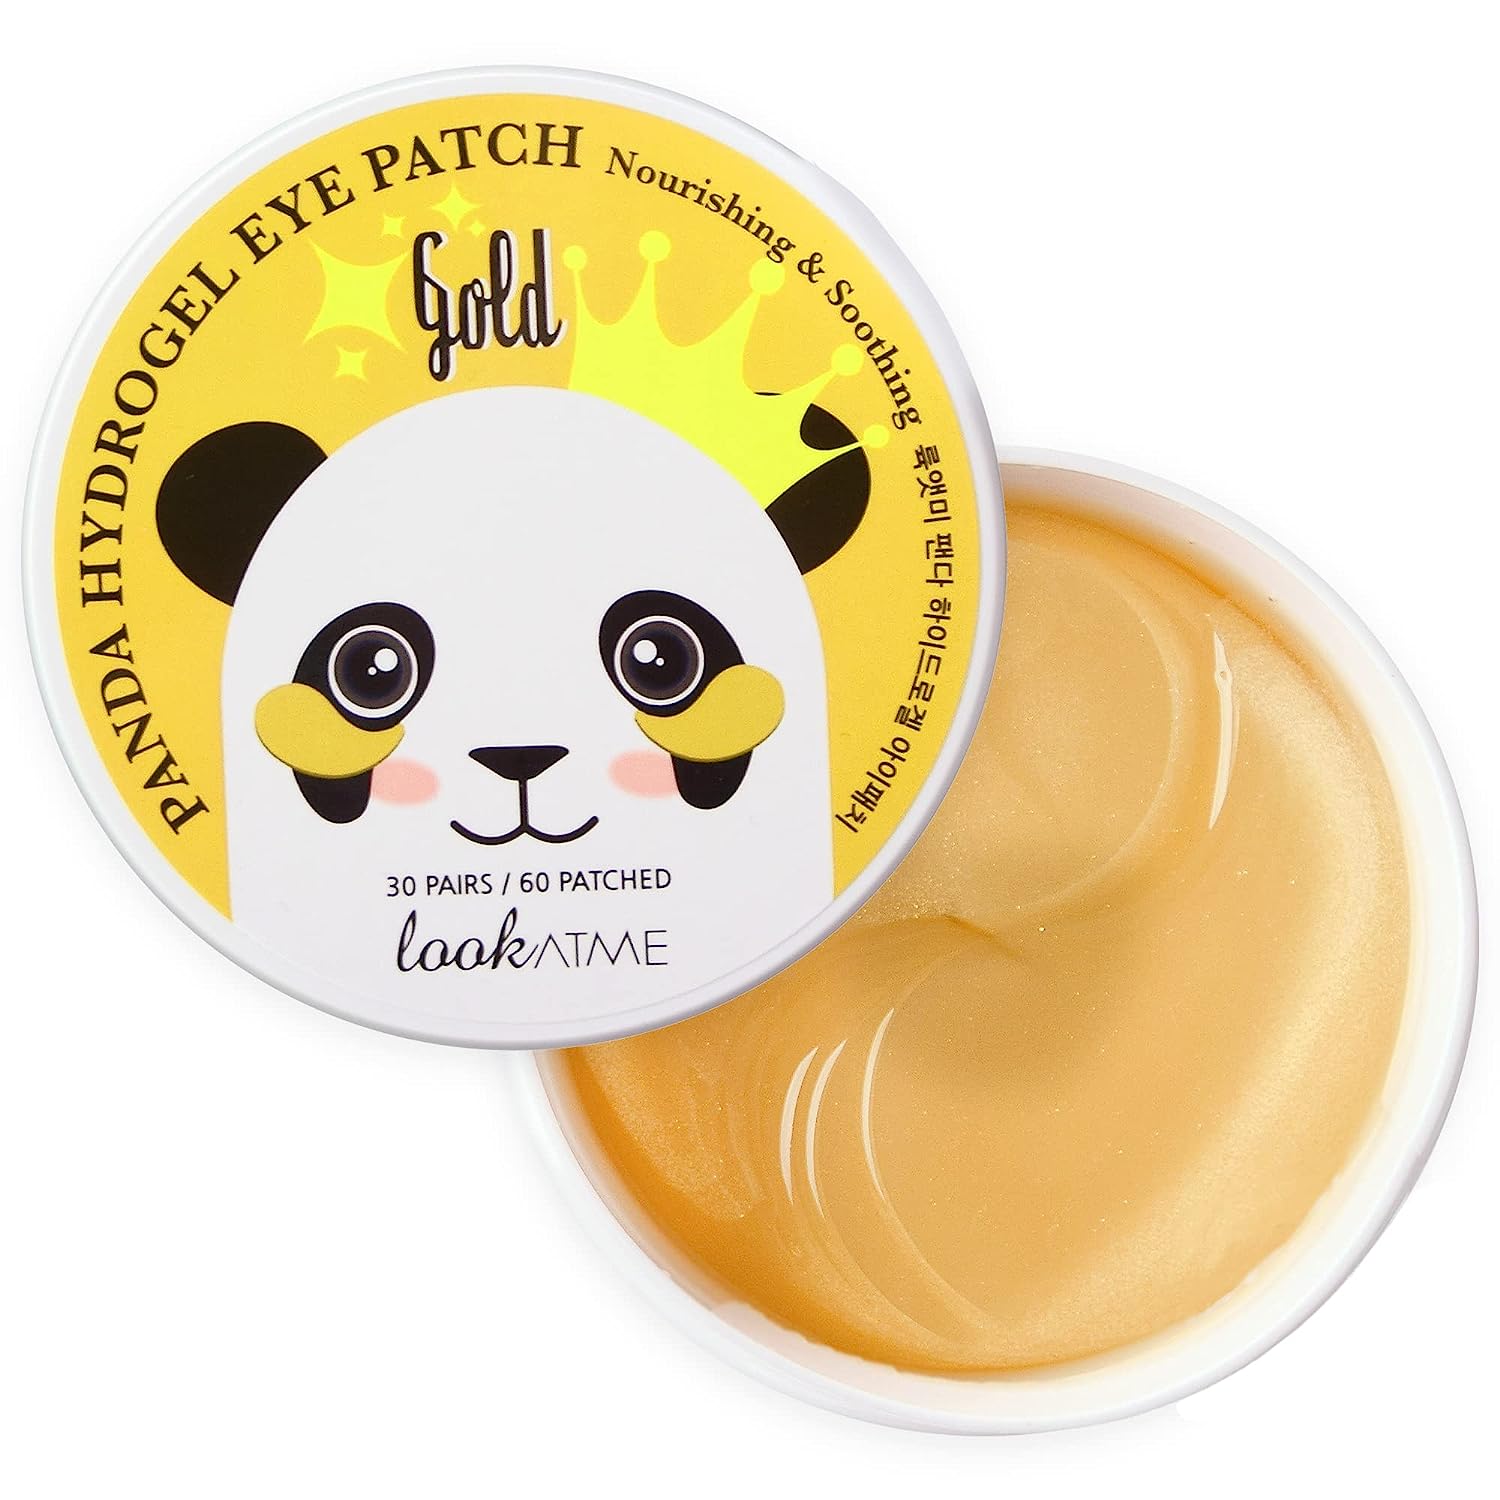 Panda HydroGel Eye Patch Gold Look at Me